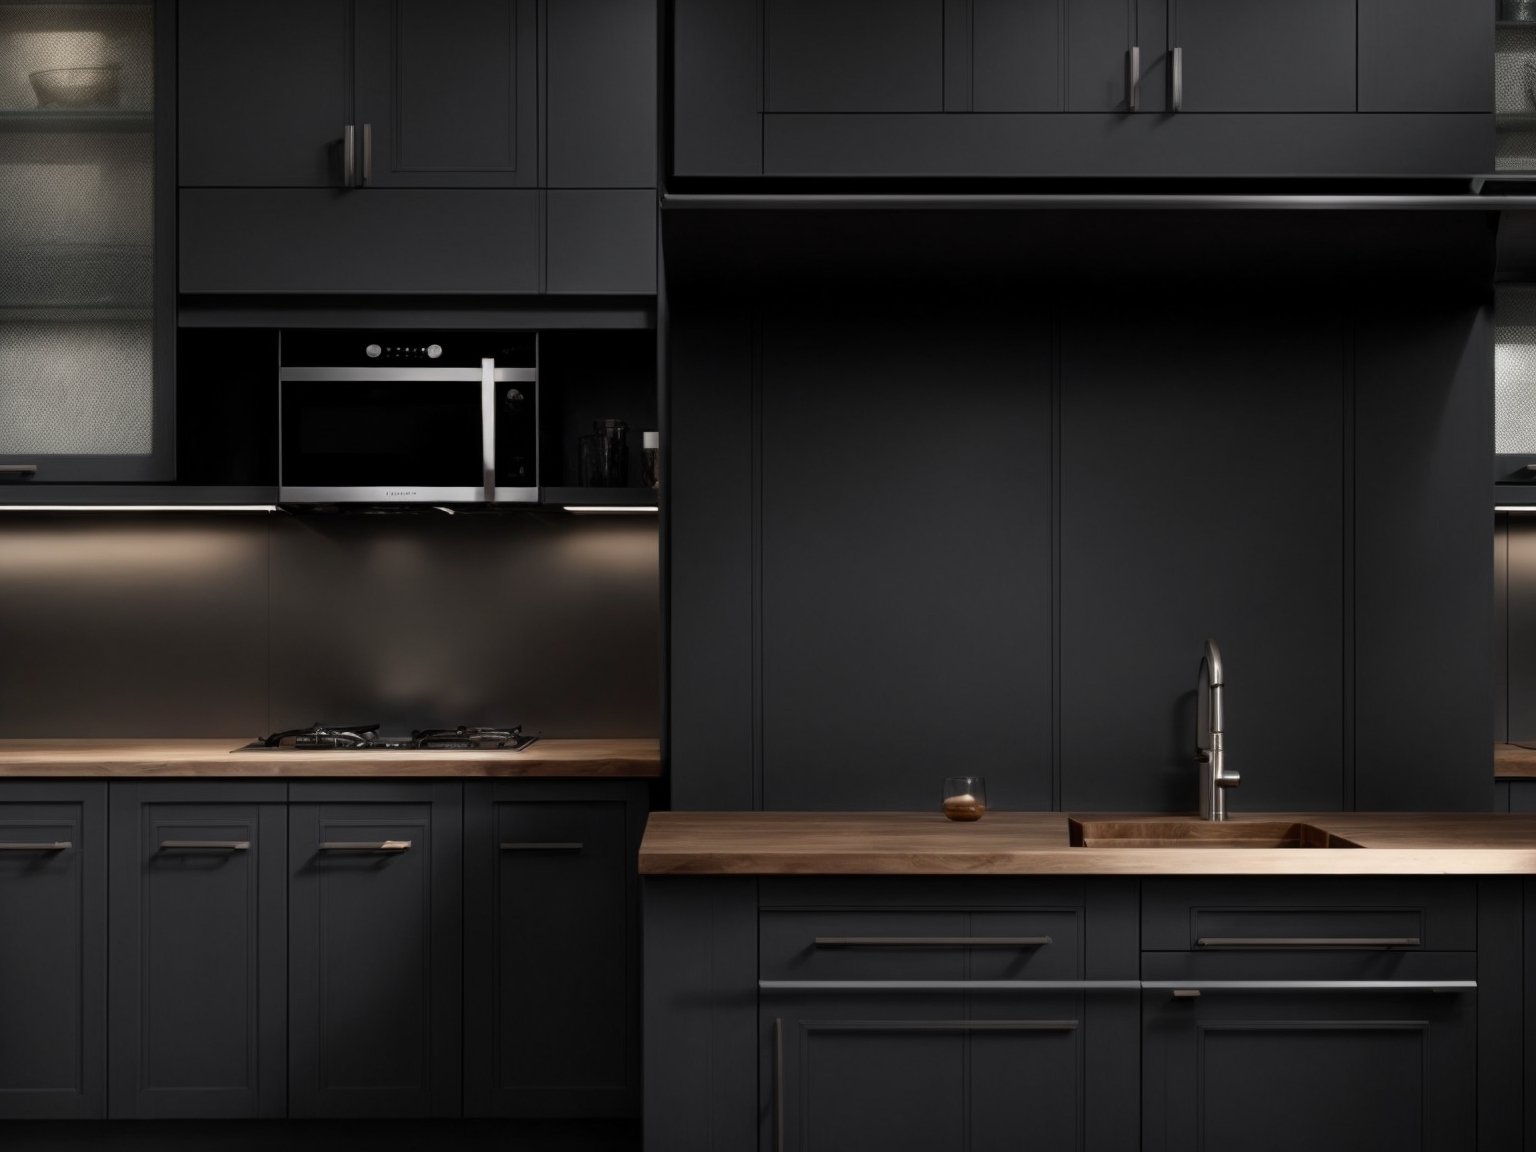 A sleek, modern kitchen with dark grey cabinets and stainless steel appliances